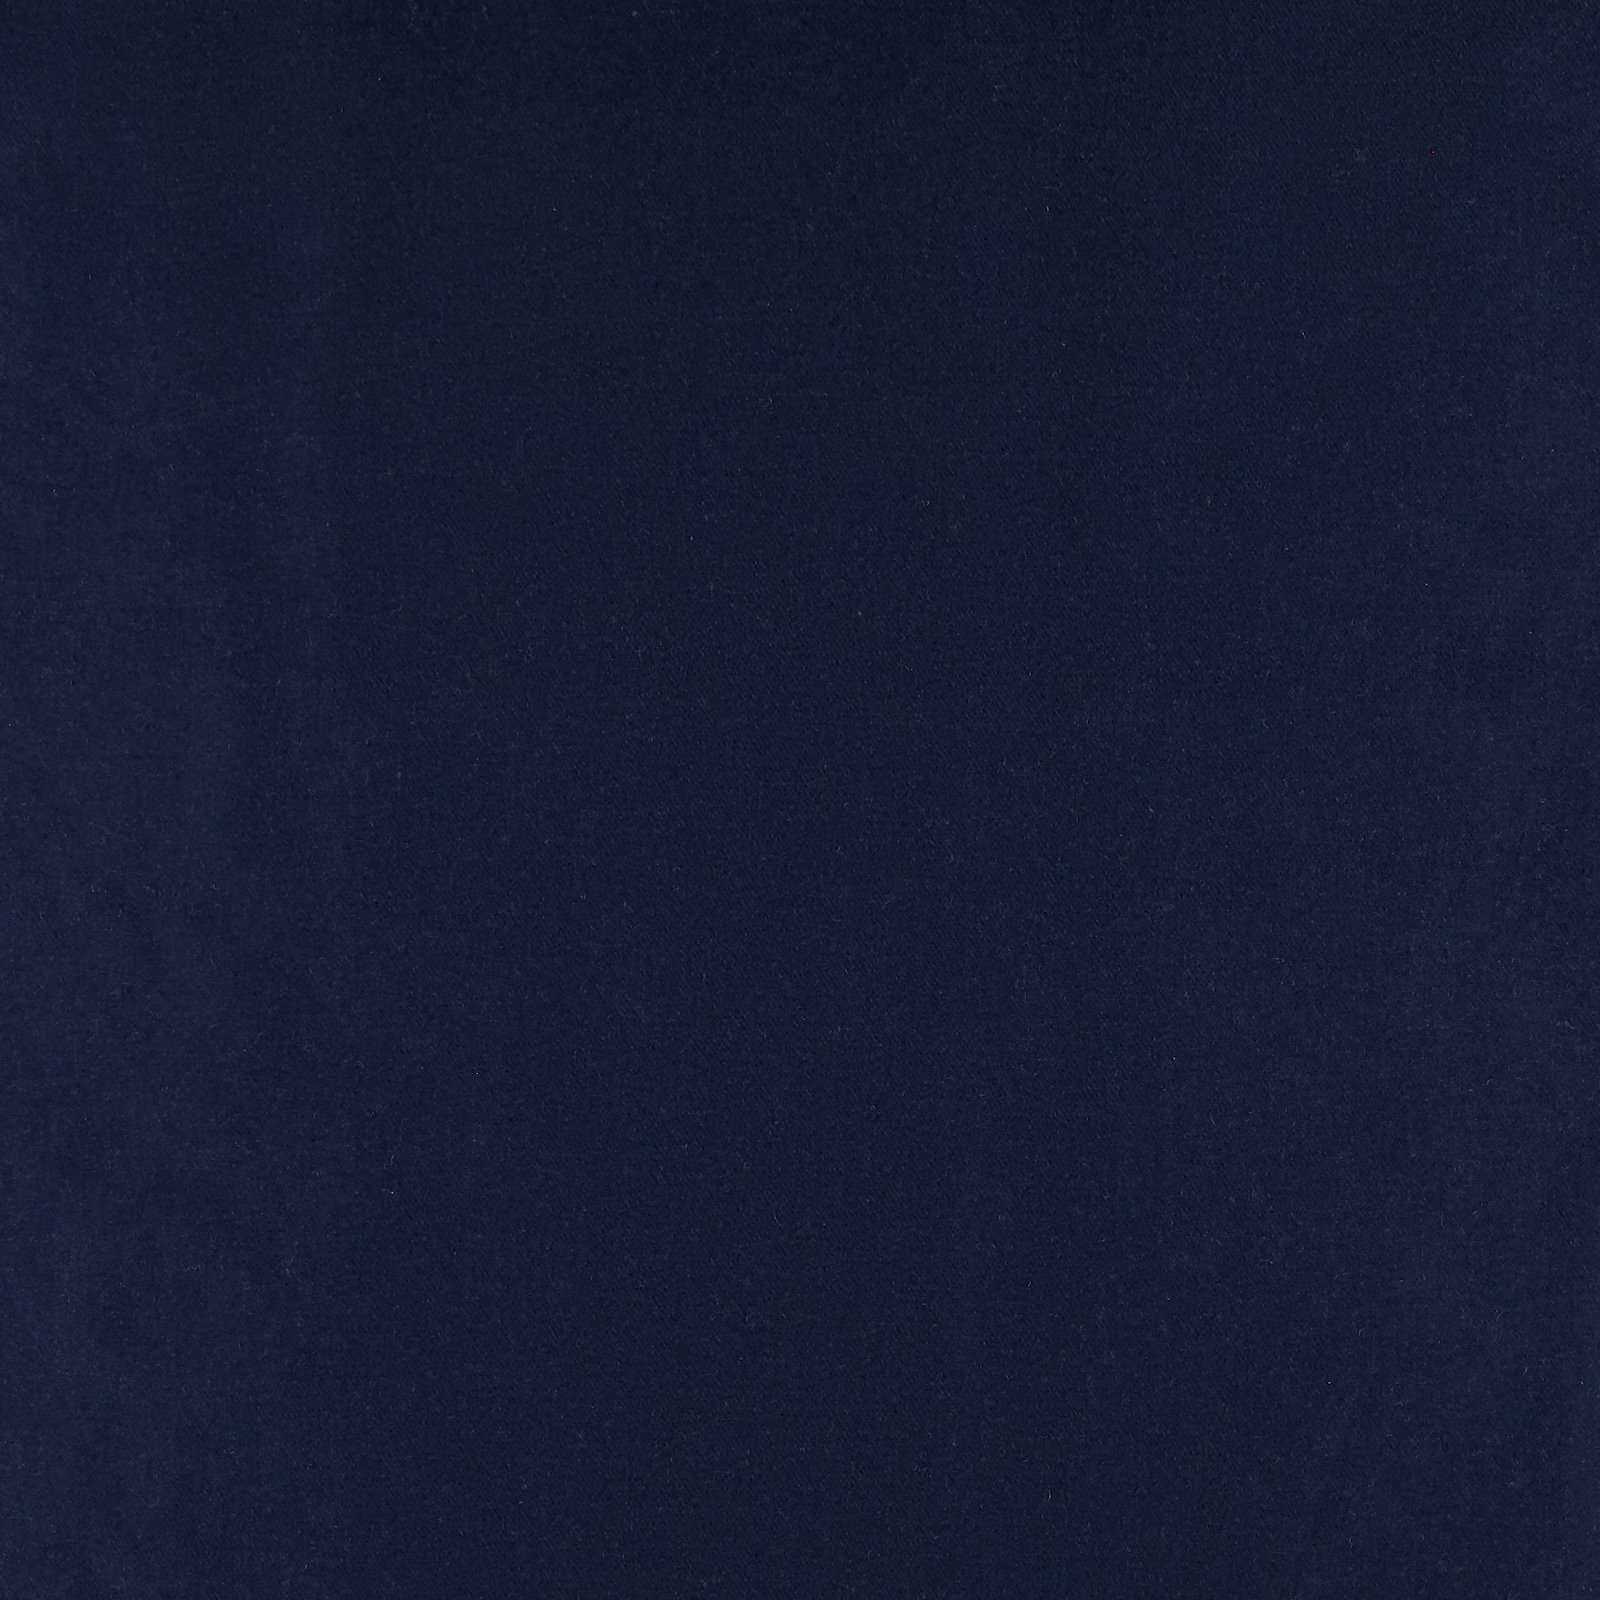 Woven wool dark blue 300235_pack_solid